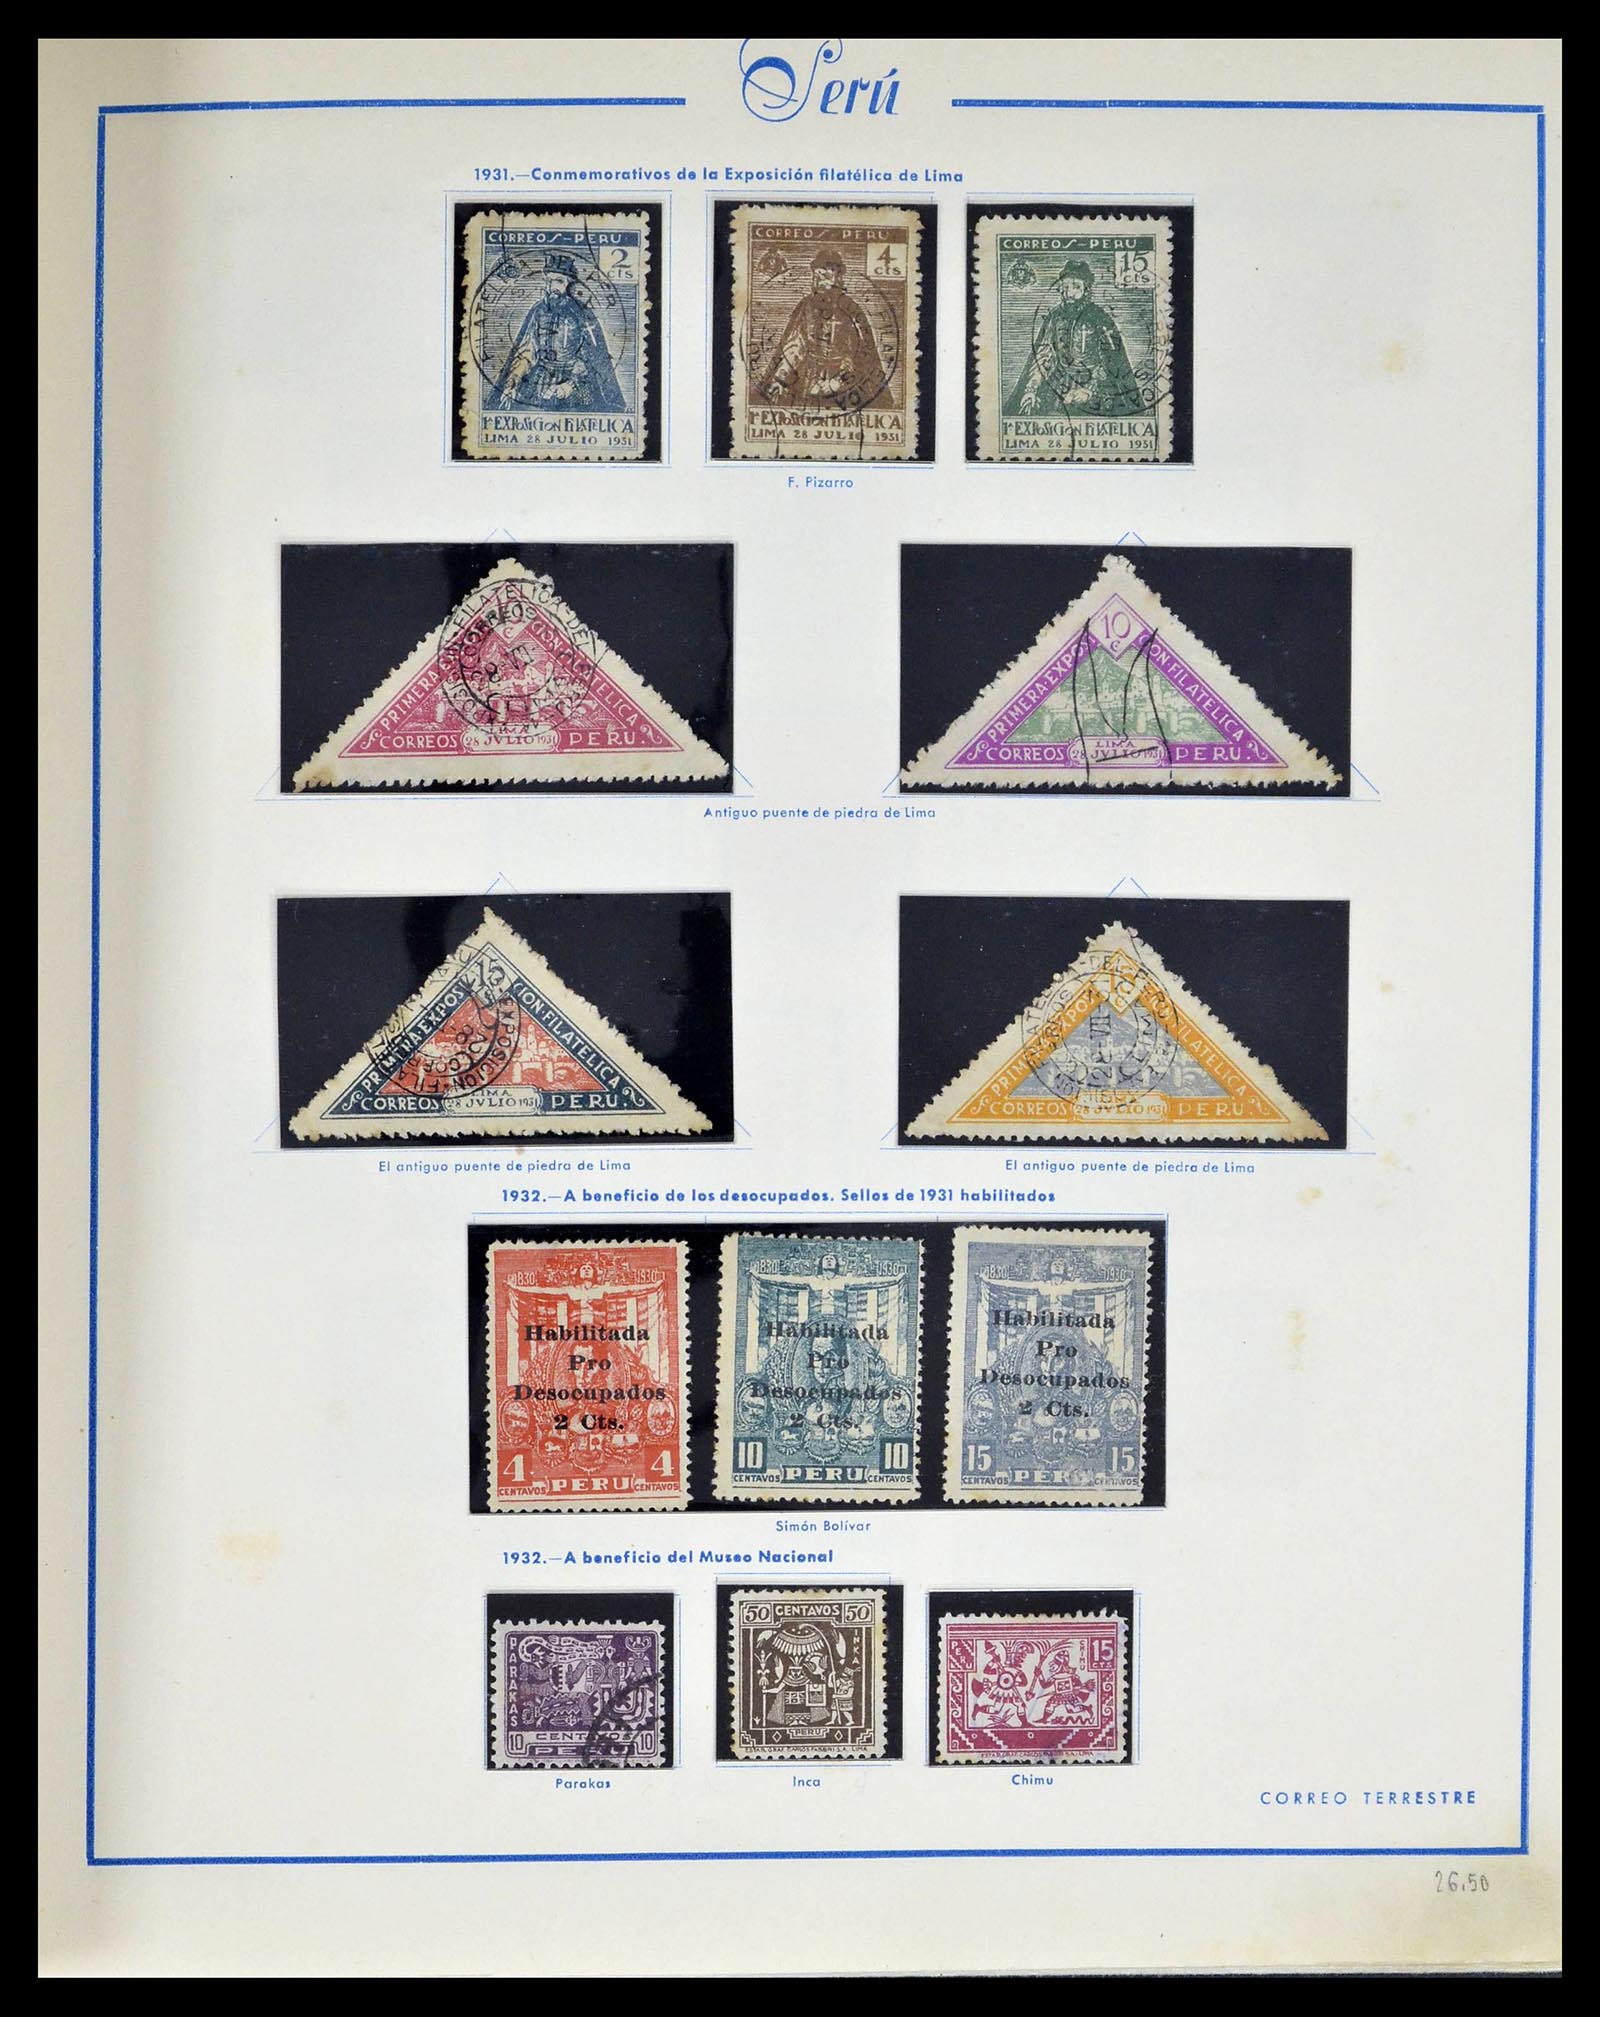 39214 0015 - Stamp collection 39214 Peru 1857-1981.